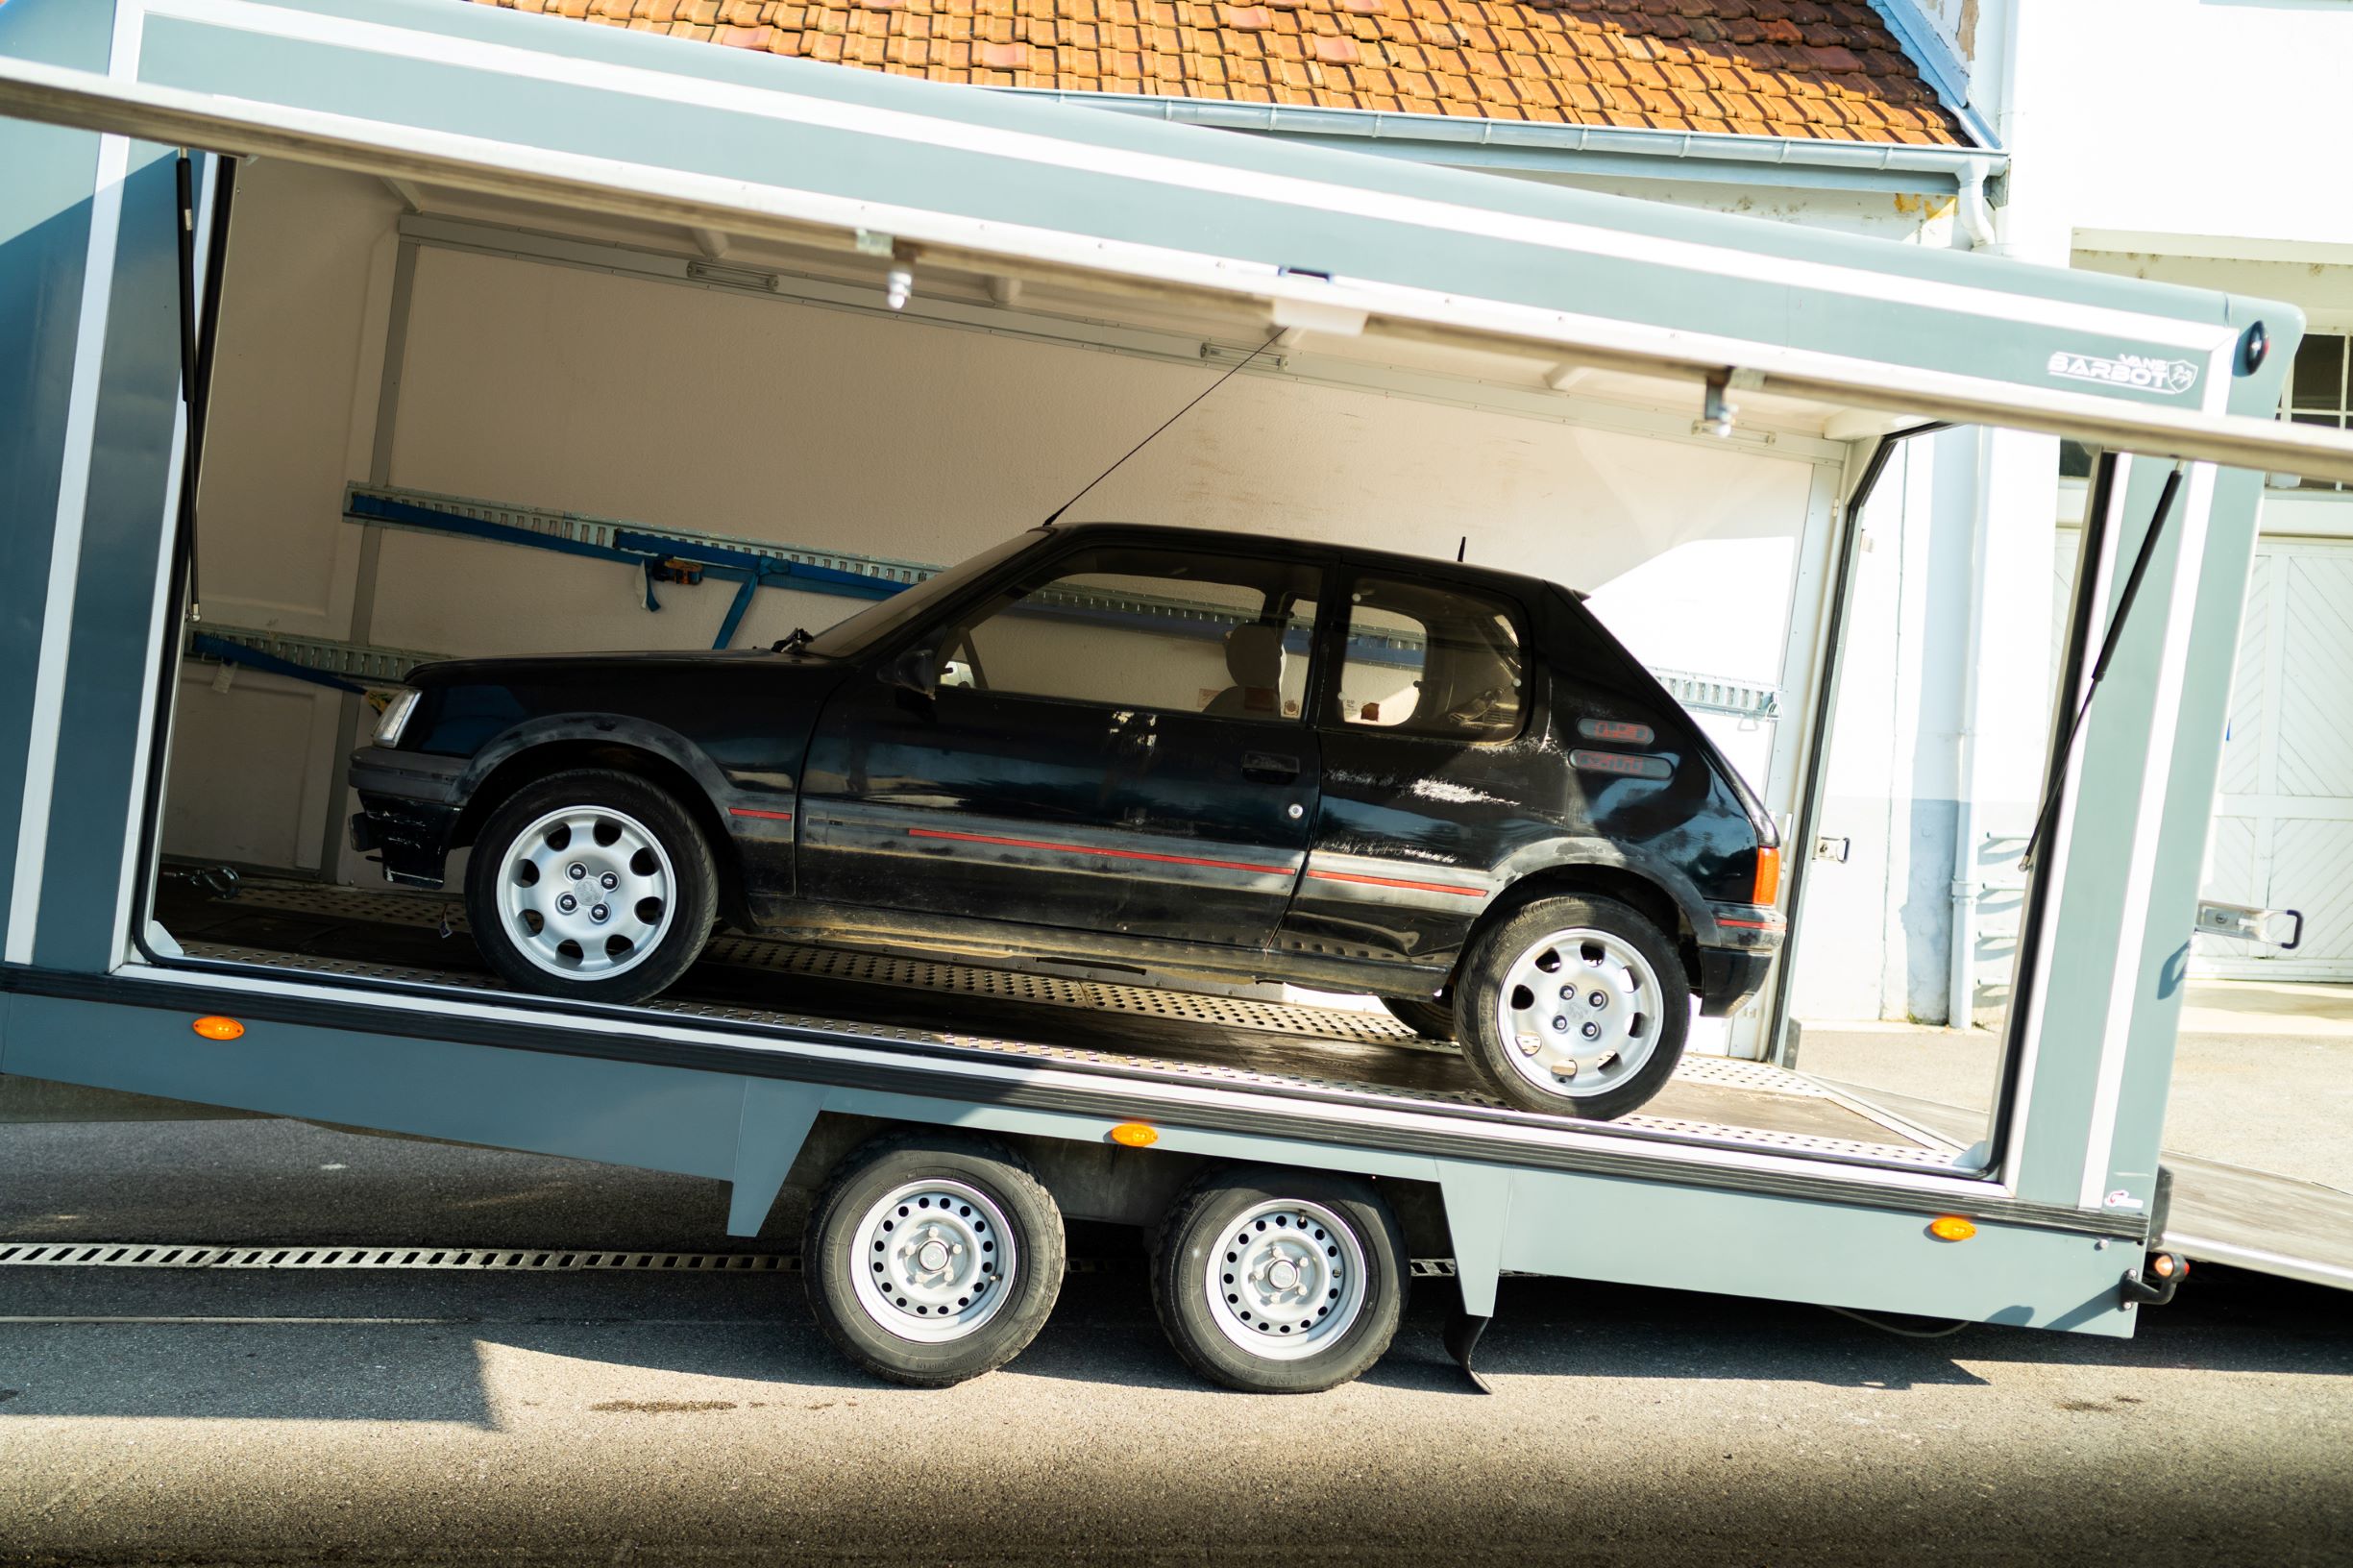 A black pre-restoration Peugeot 205 GTI in a trailer